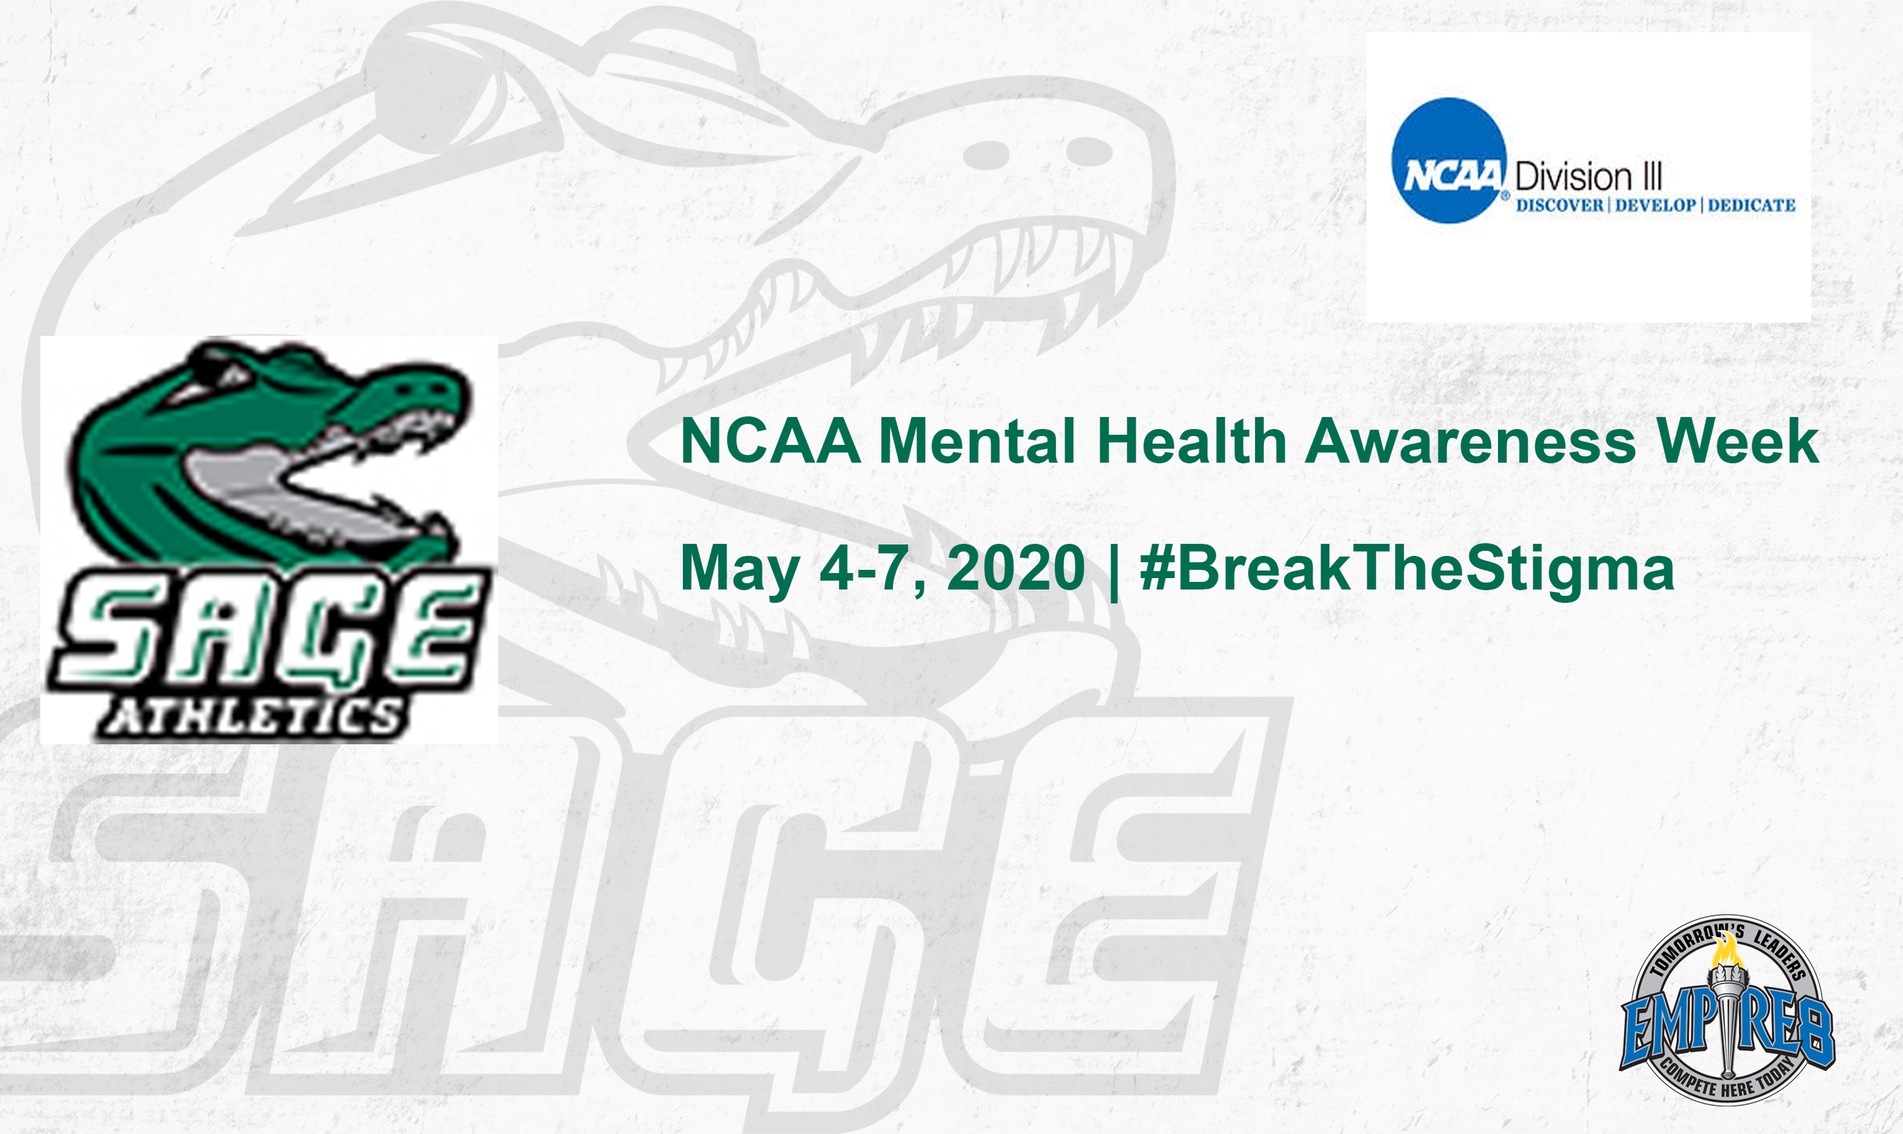 NCAA Mental Health Awareness Week is Here  #BreakTheStigma